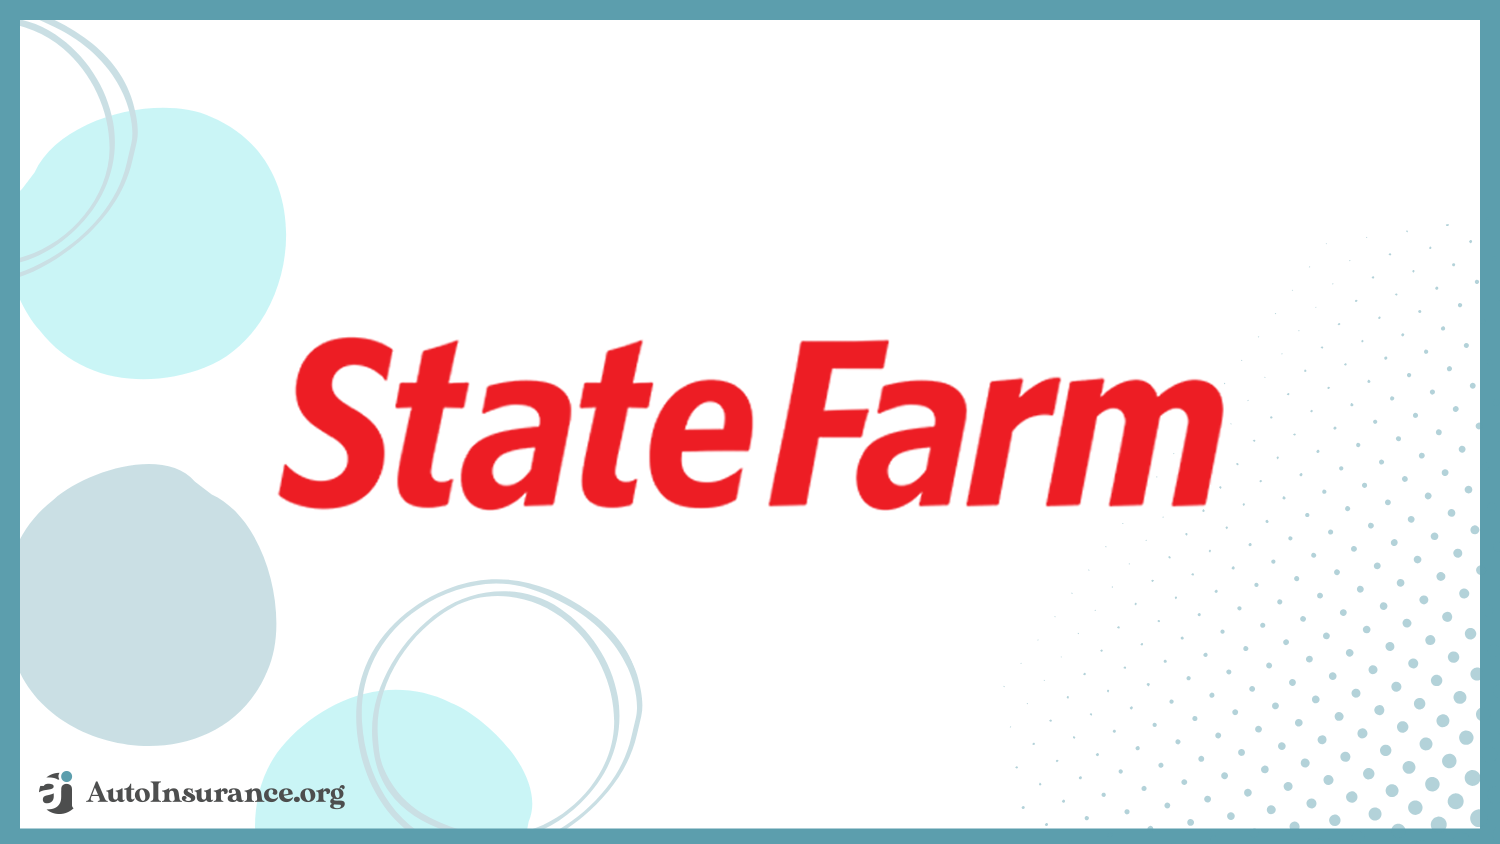 State Farm: Best Auto Insurance for Custom Cars